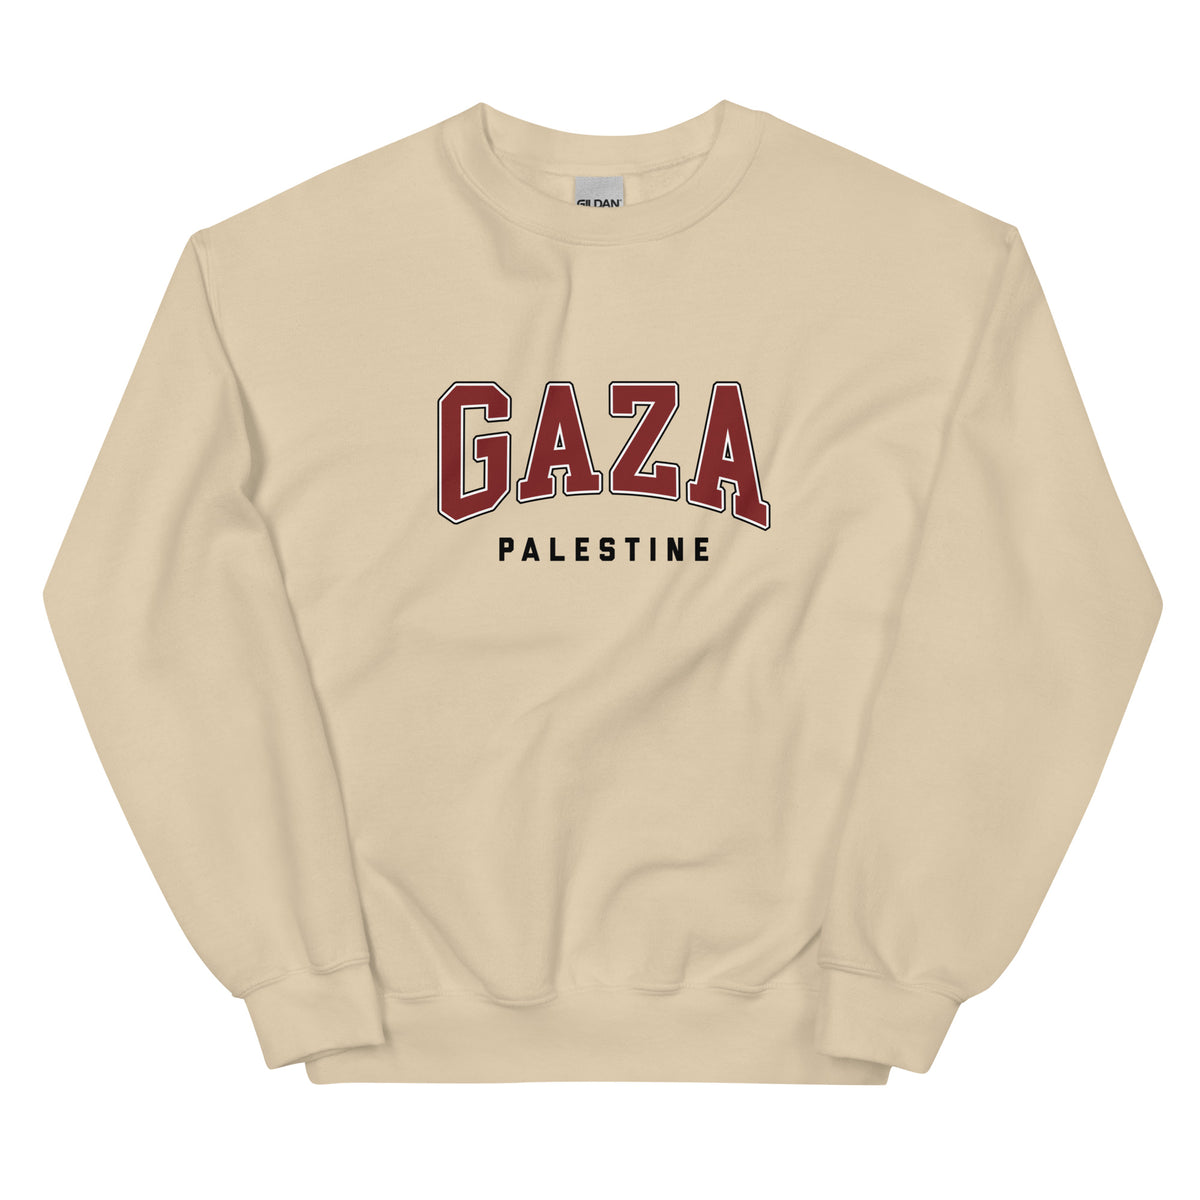 Palestine Vintage Stamp Snow Washed OVERSIZED T-shirt - Final Sale